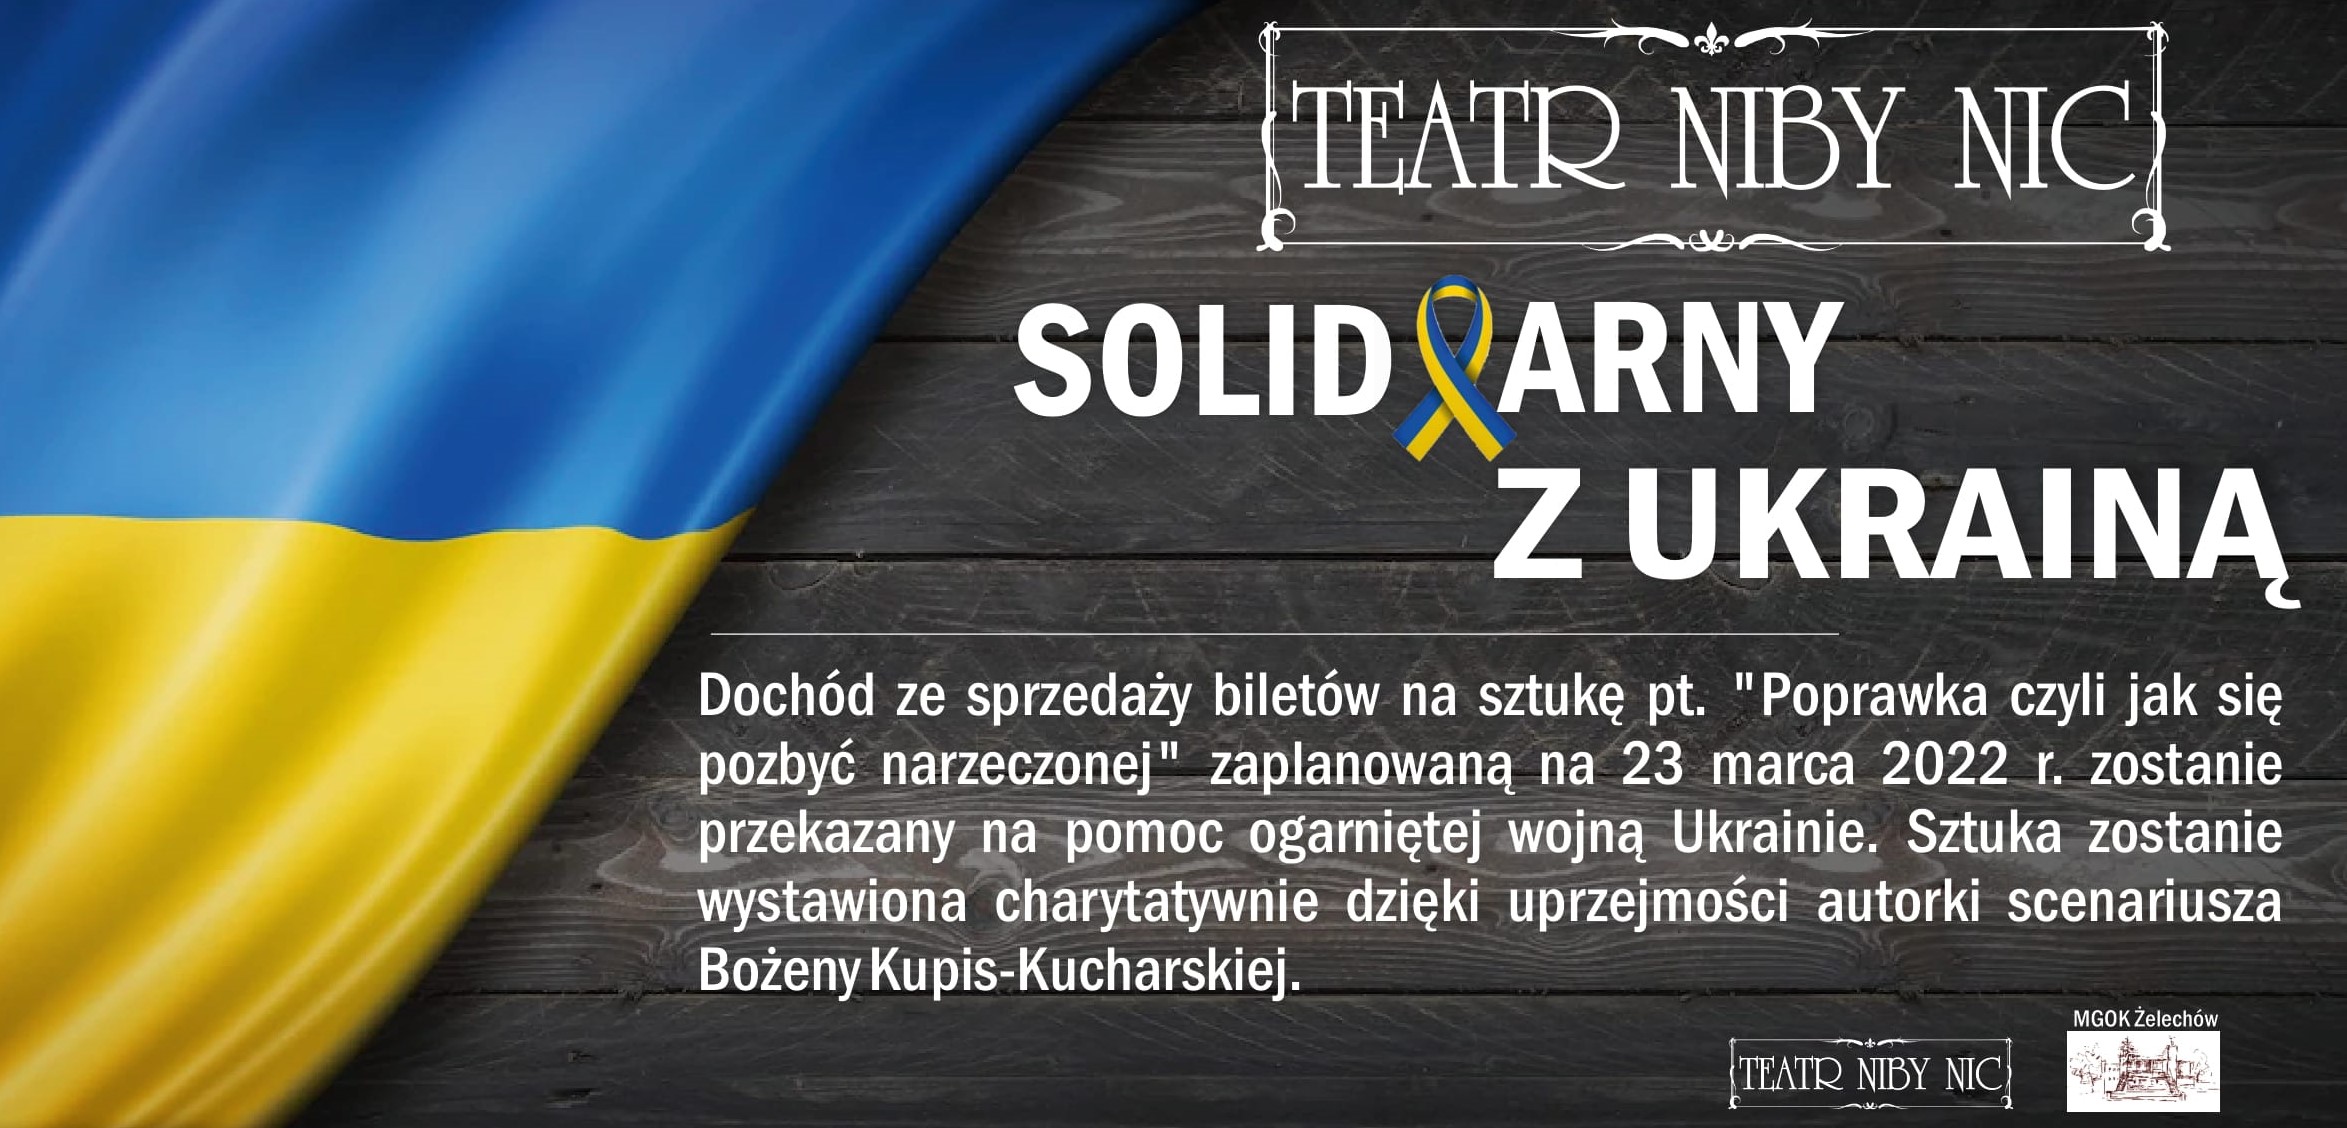 Miniaturka artykułu Teatr „Niby nic” solidarny z Ukrainą